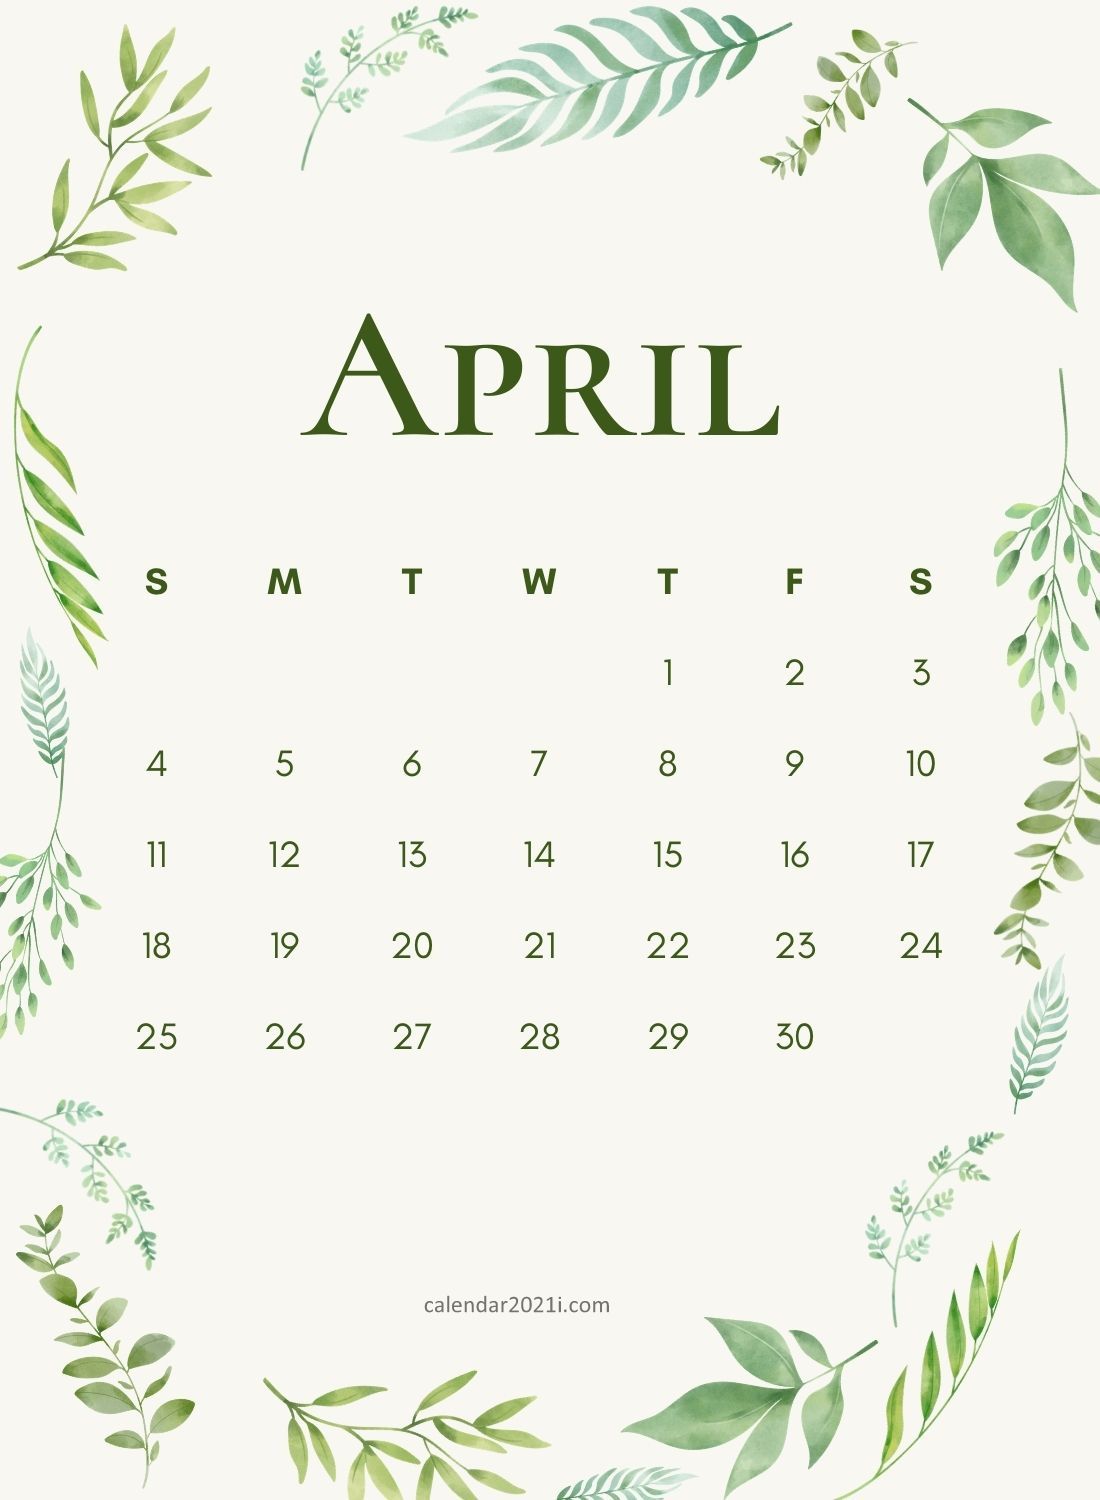 April 2021 Wall Calendar Printable